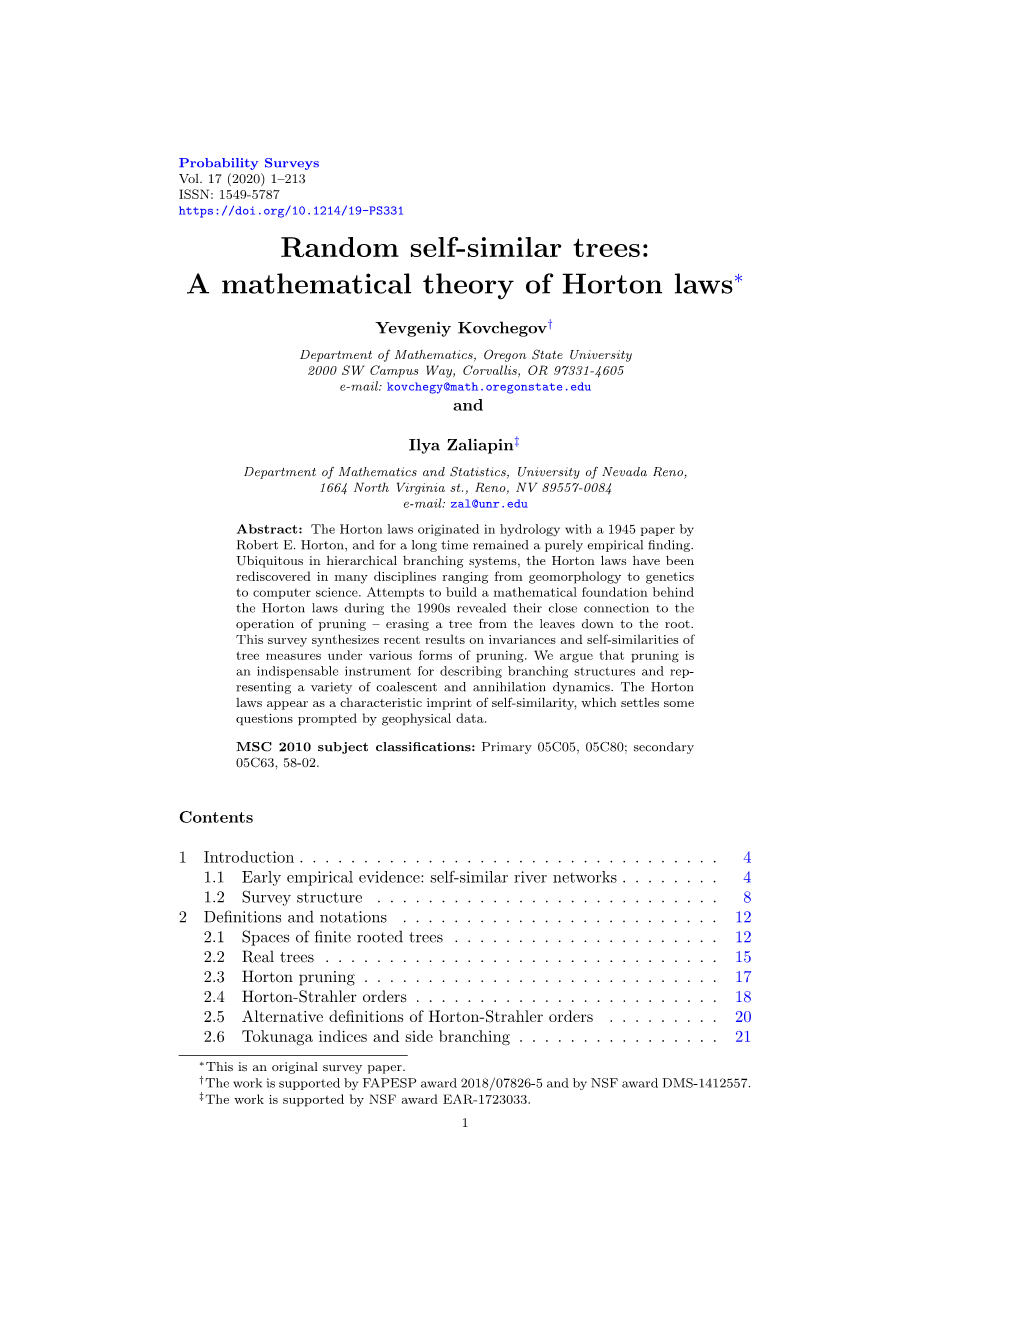 Random Self-Similar Trees: a Mathematical Theory of Horton Laws∗